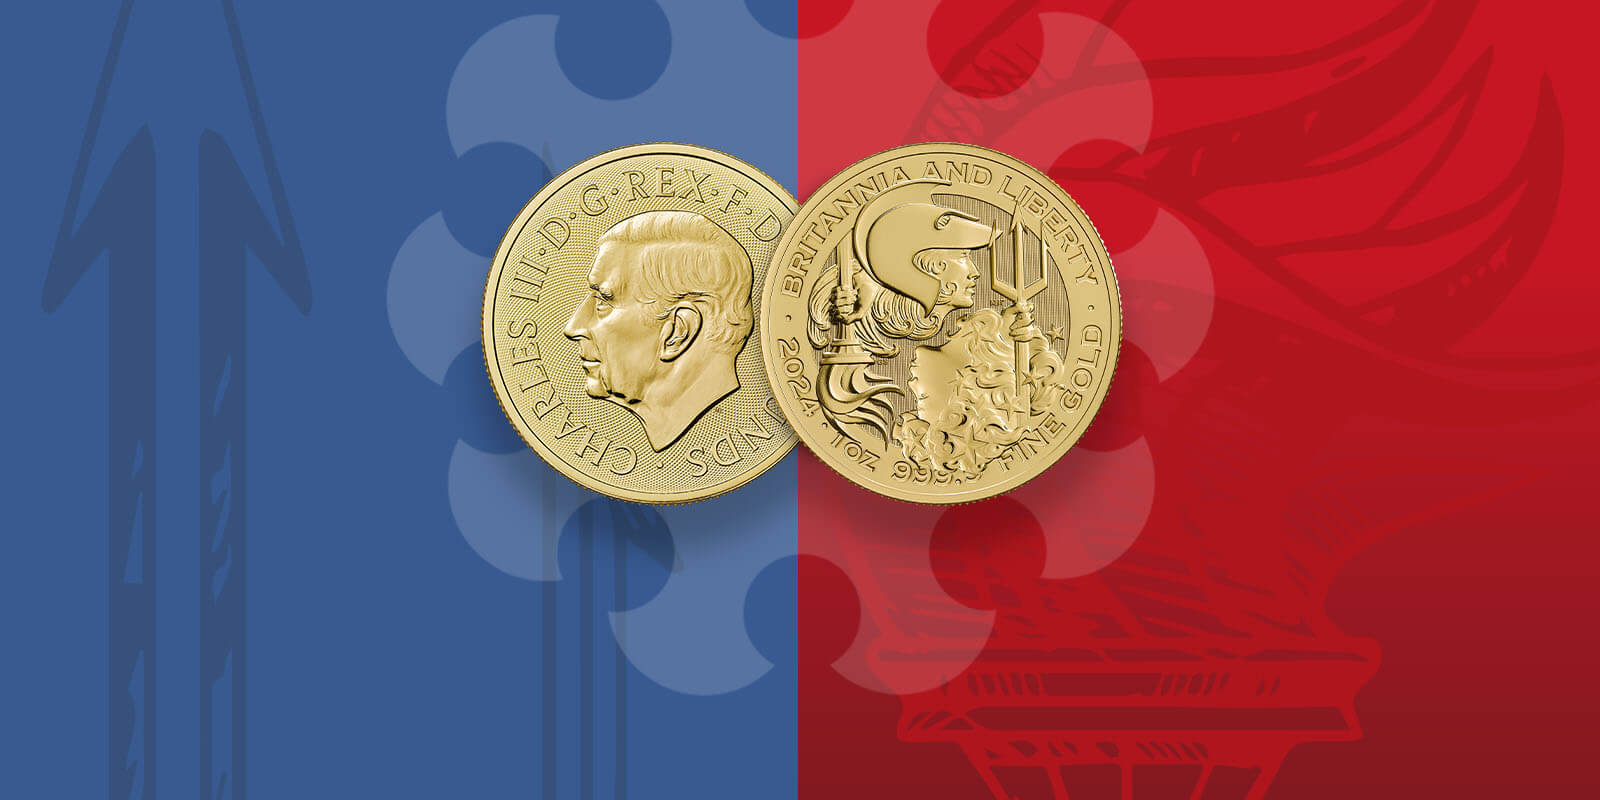 Britannia and Liberty Bullion Coin Range